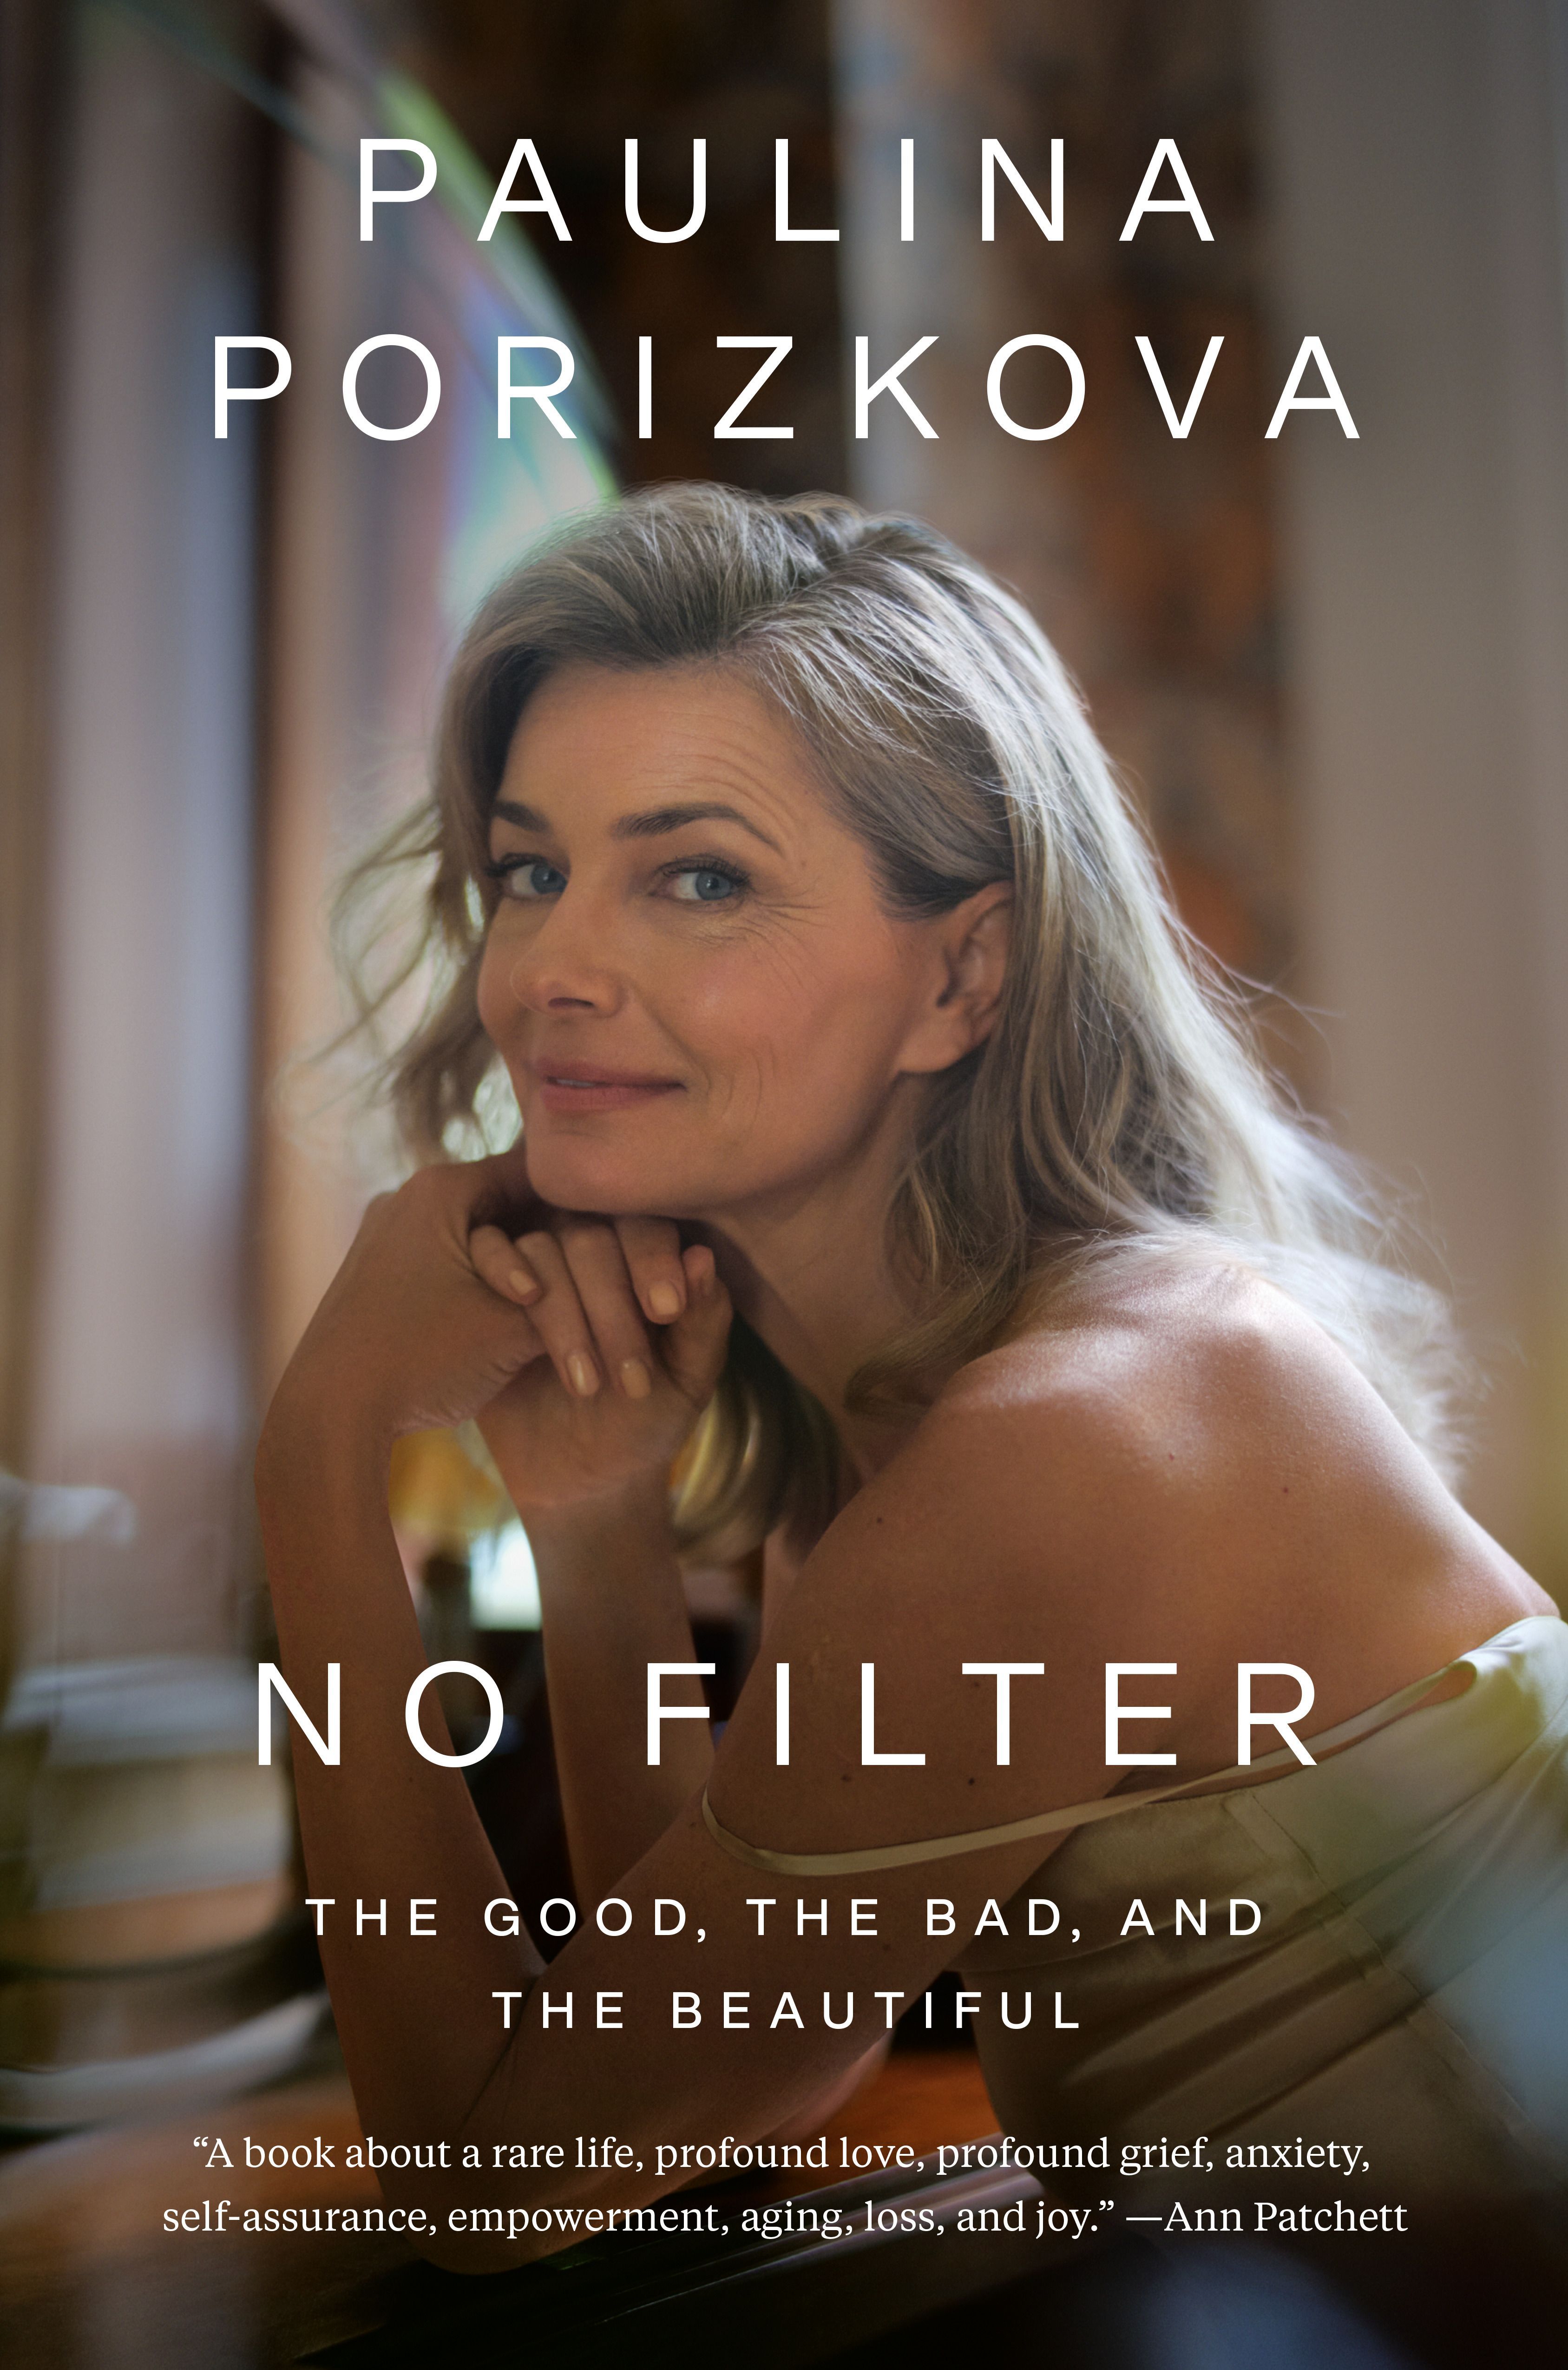 No Filter by Paulina Porzikova